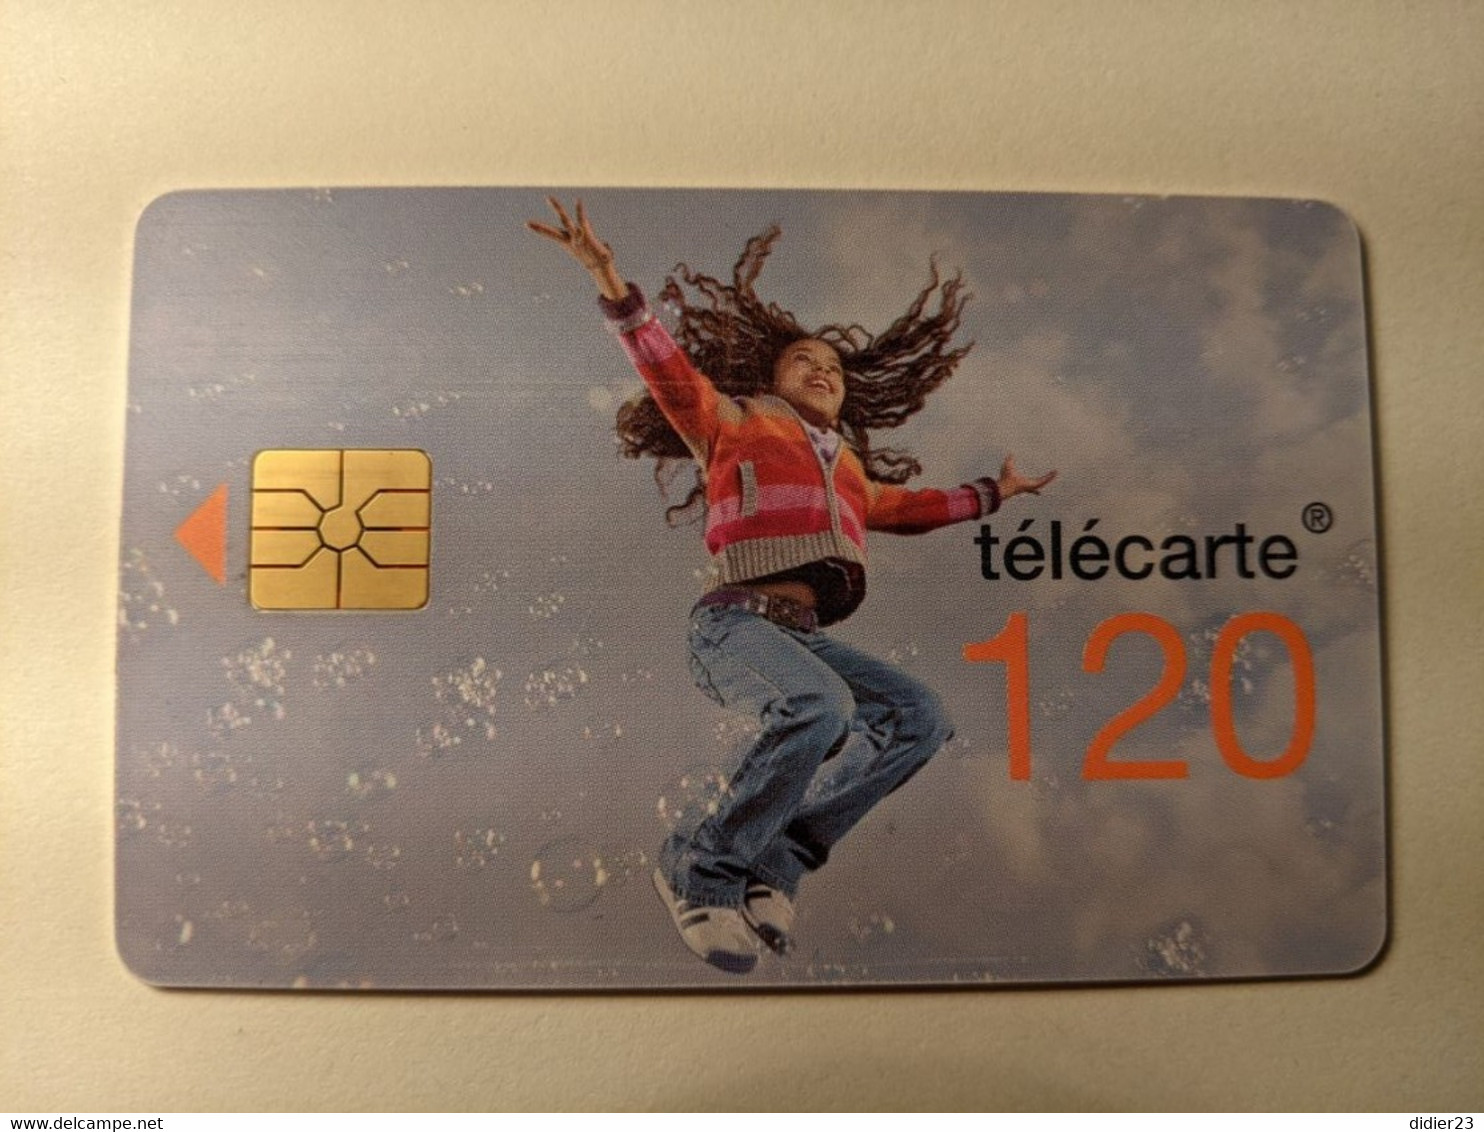 TELECARTE FRANCE TELECOM  120 - Opérateurs Télécom